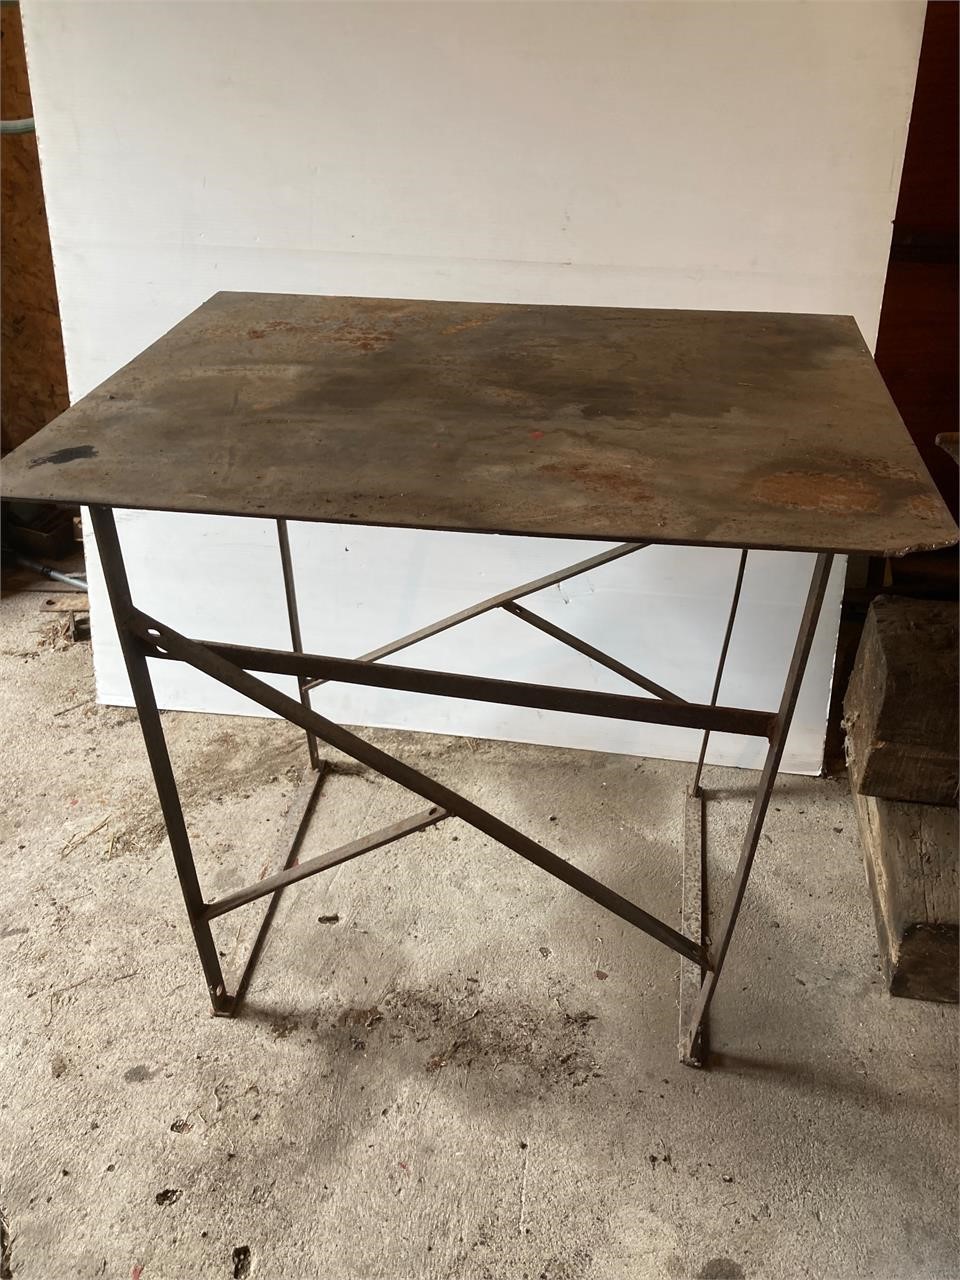 Welding table. 31.5” x 24” x 28” high